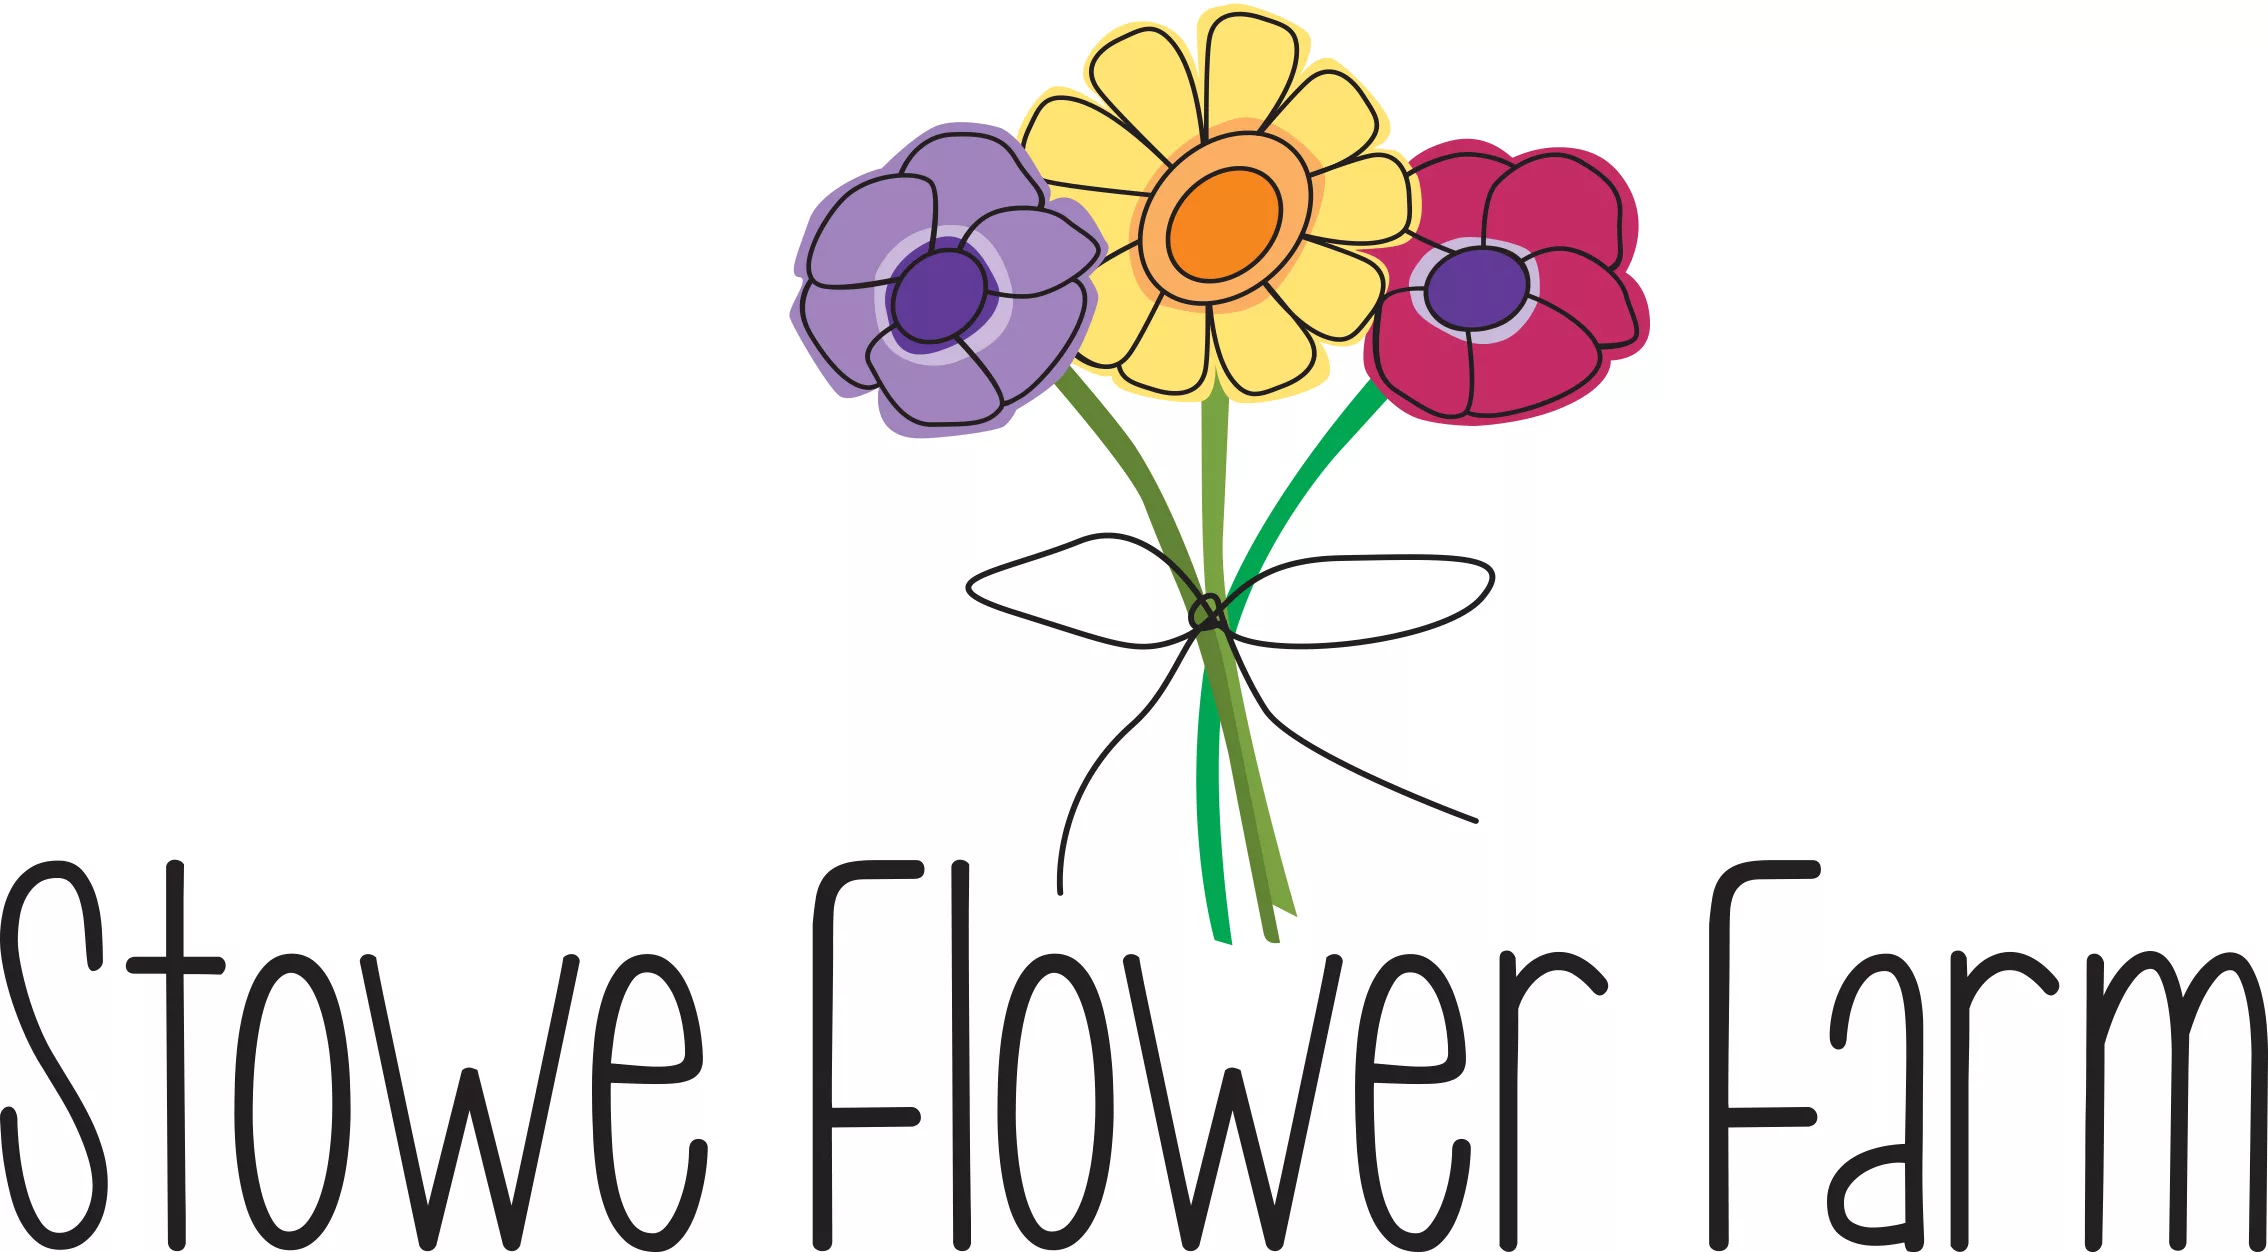 Stowe Flower Farm